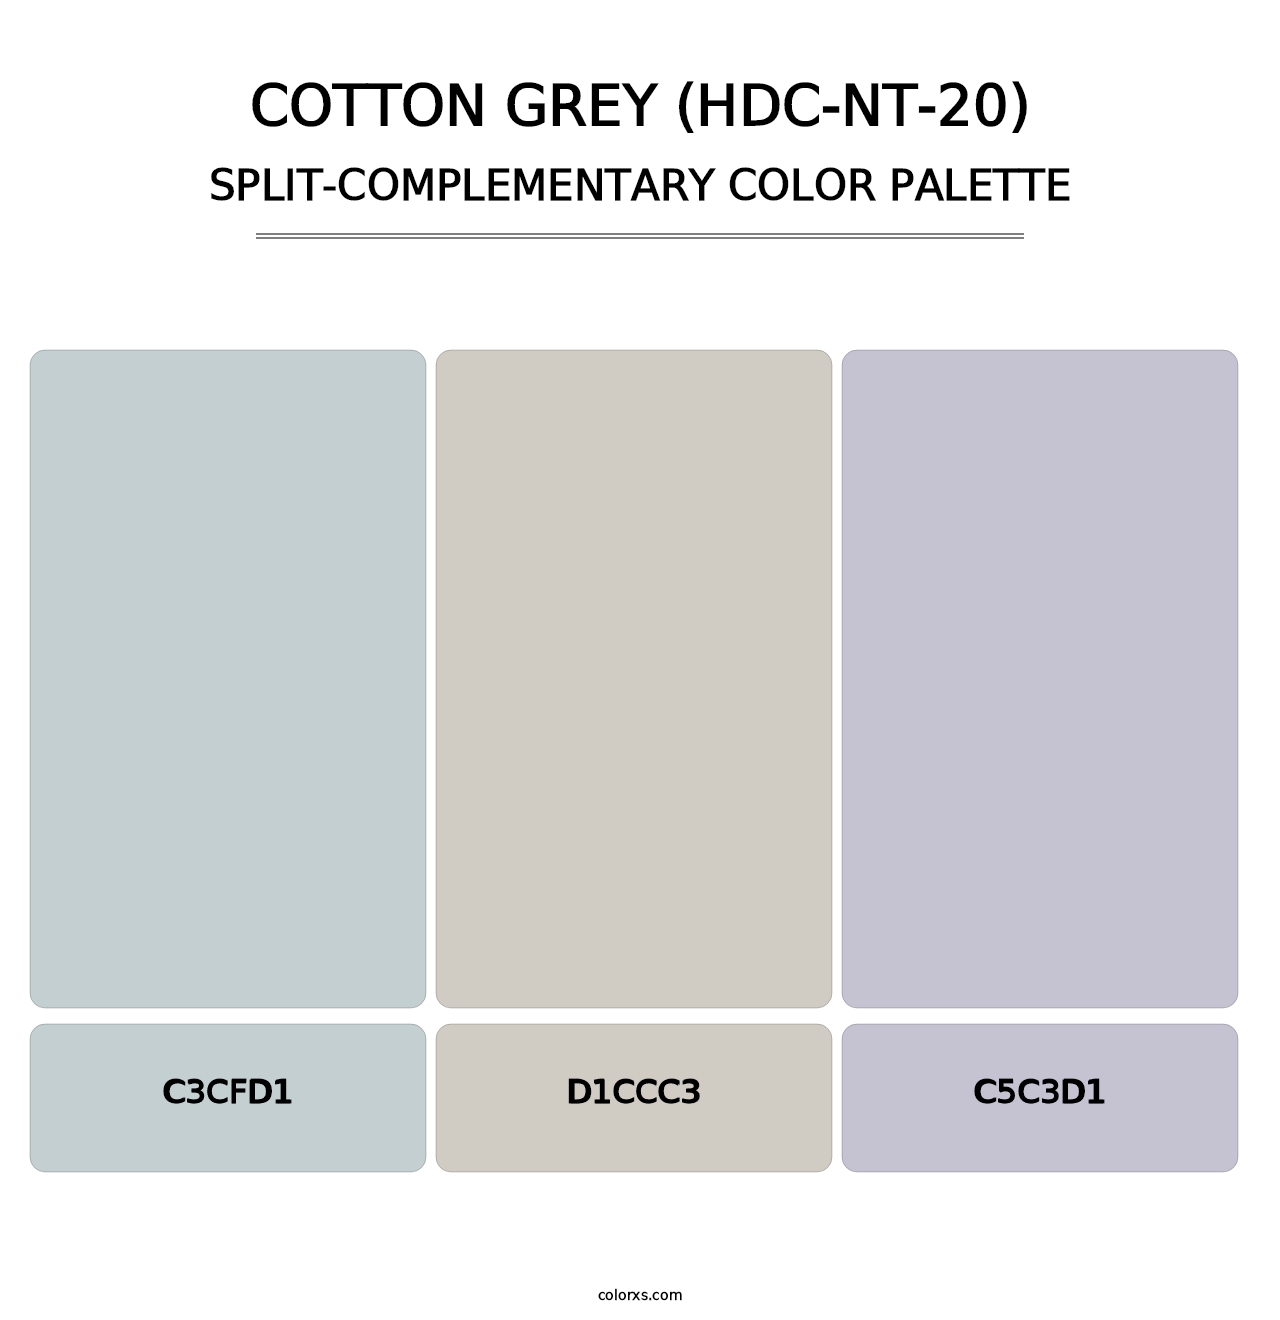 Cotton Grey (HDC-NT-20) - Split-Complementary Color Palette